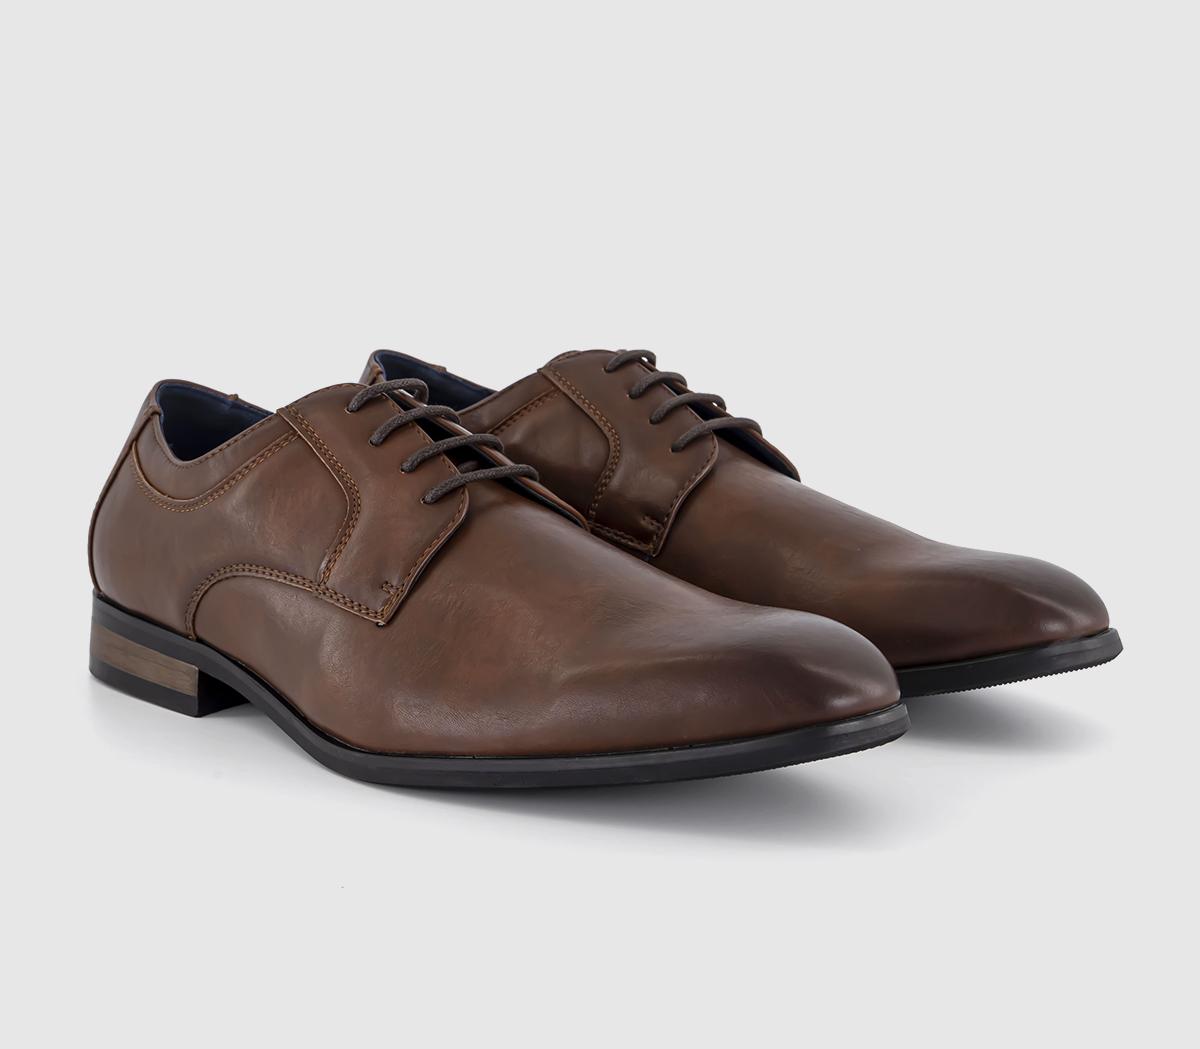 OFFICE Mens Modena Plain Toe Derby Shoes Brown, 12